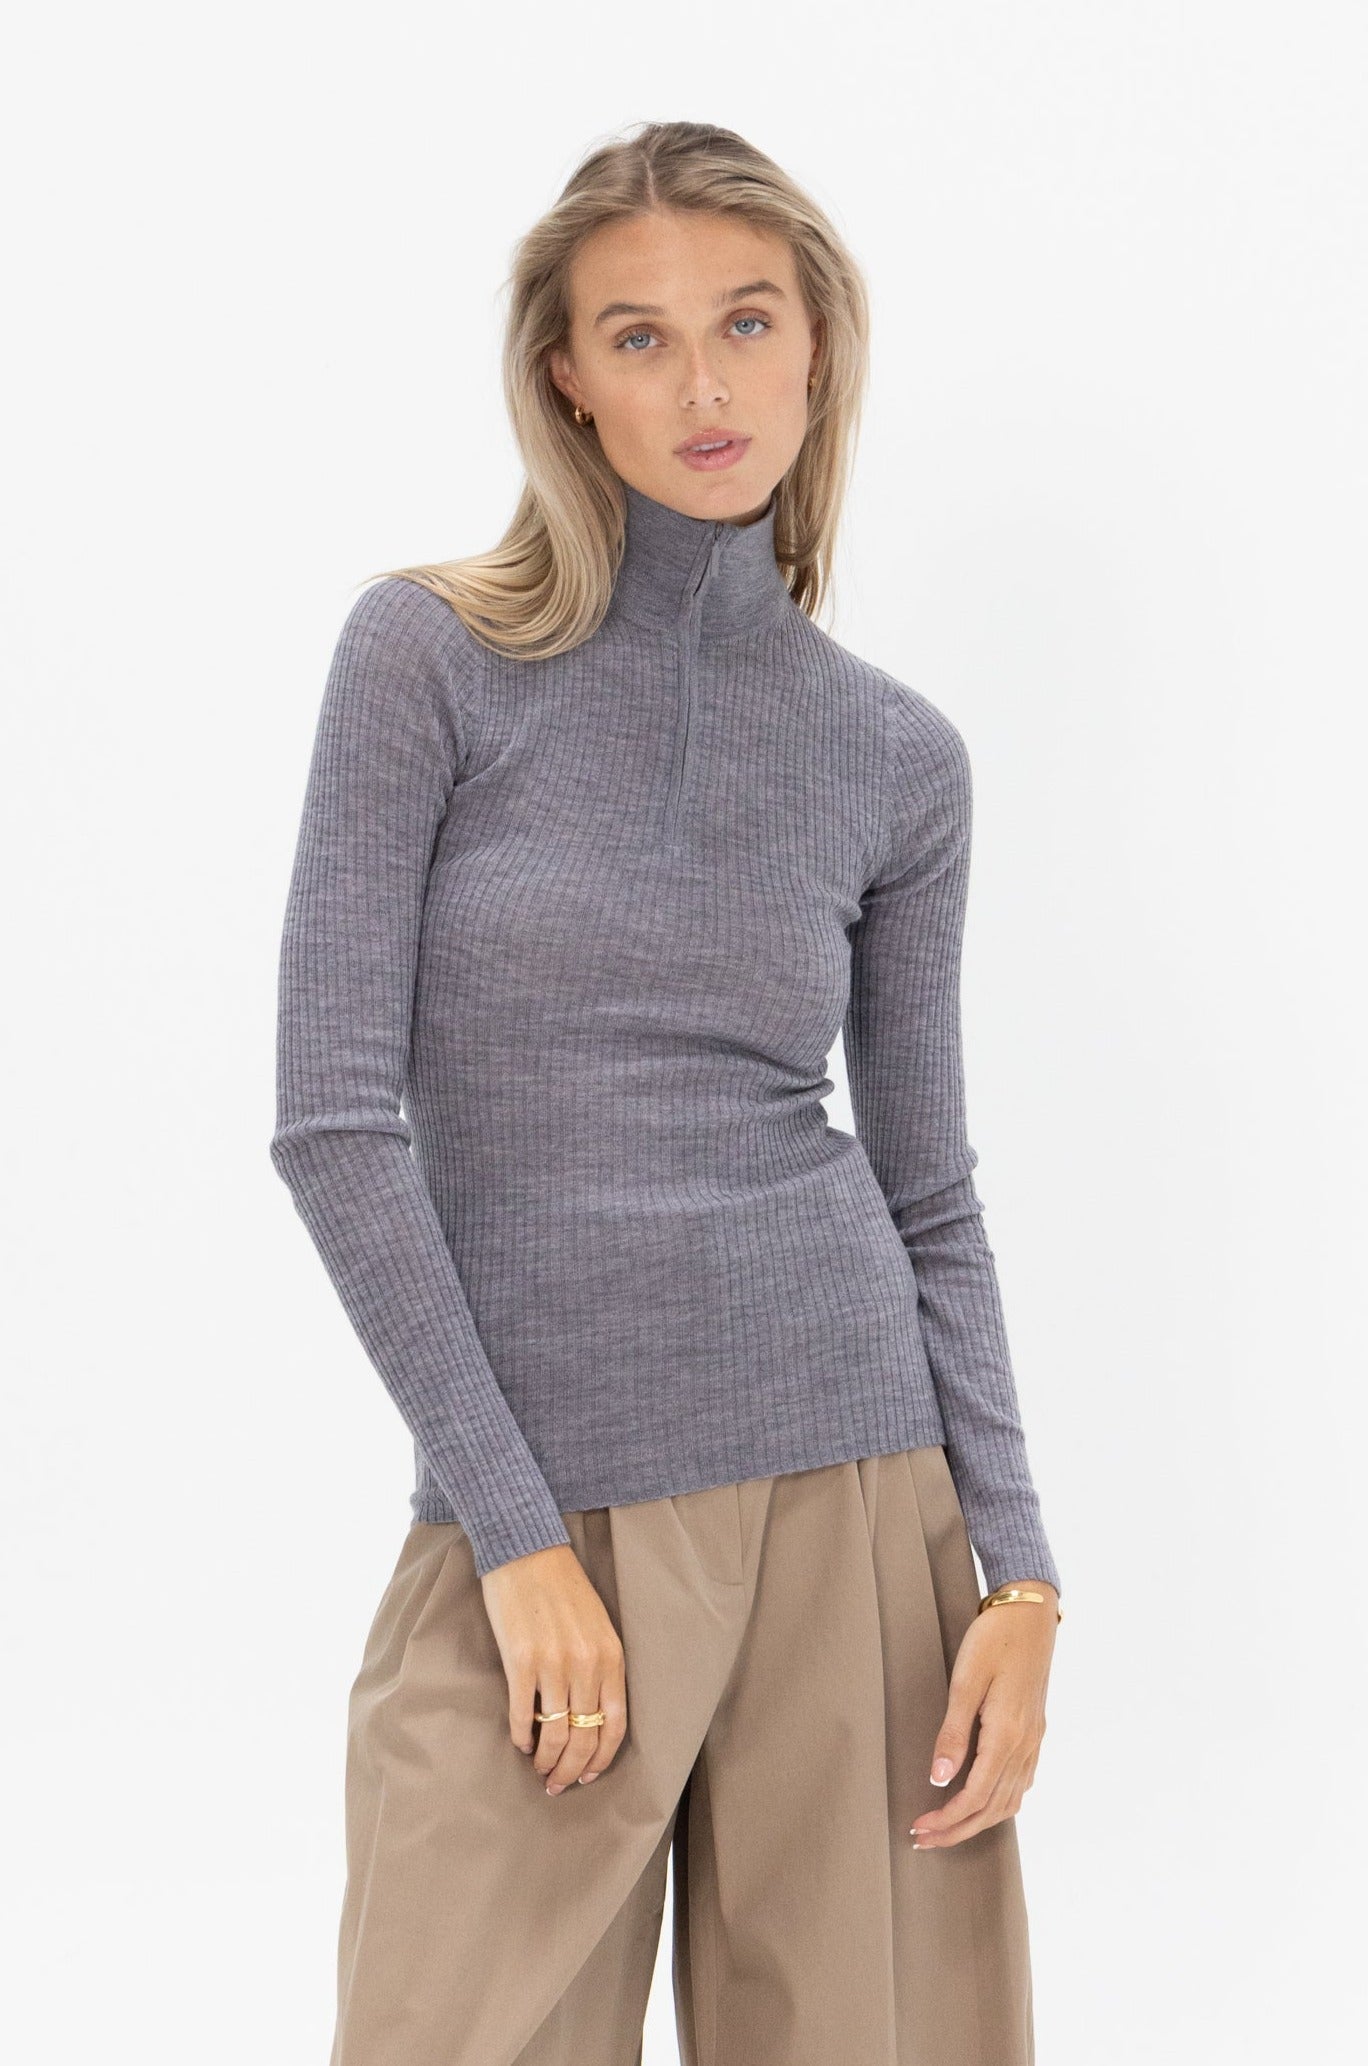 TIBI - Zip-Up Turtleneck Sweater, Grey